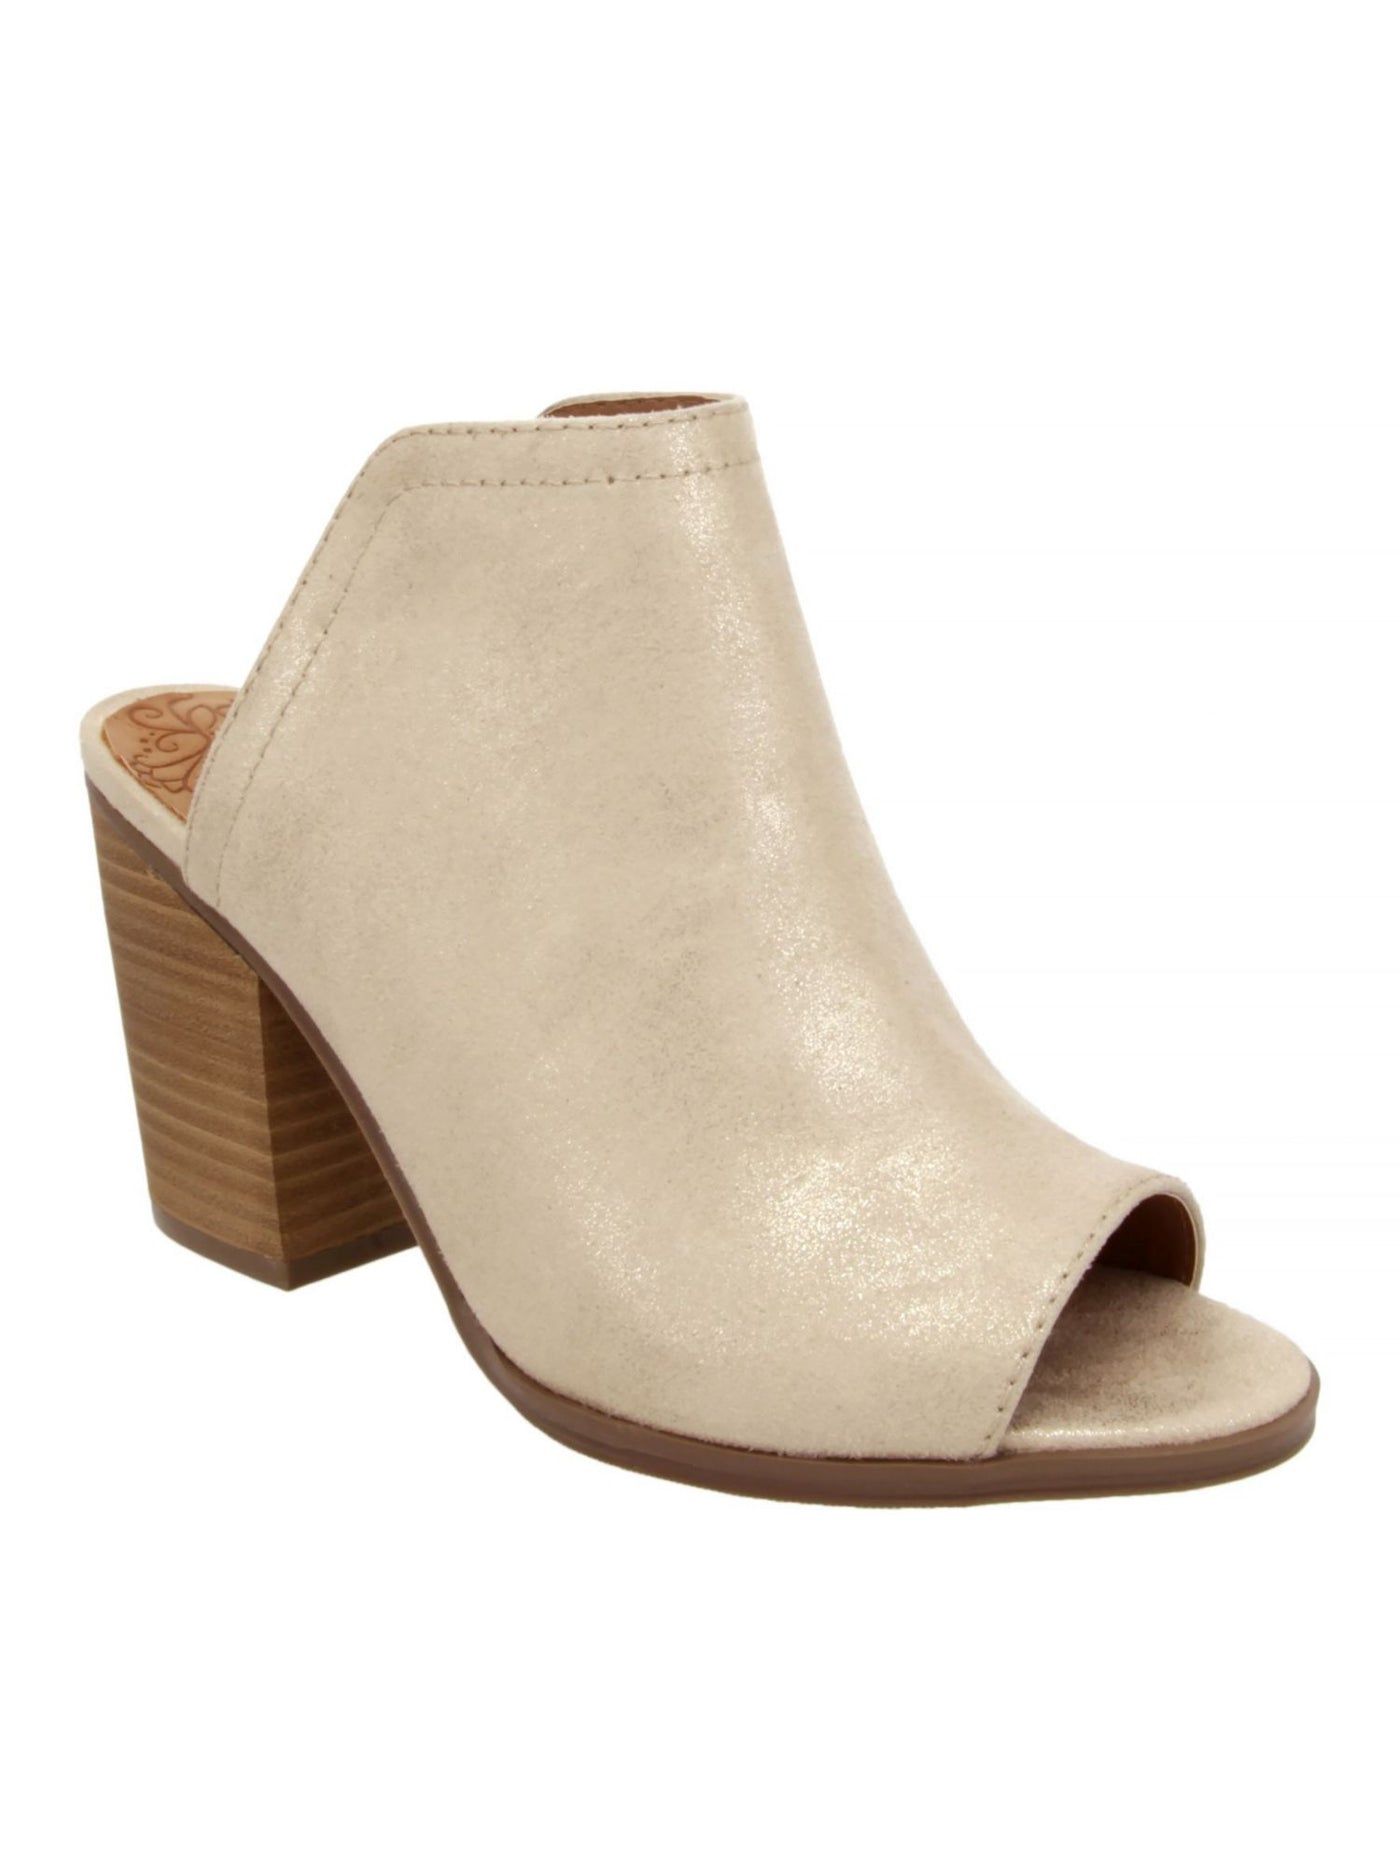 SUGAR Womens Gold Comfort Peppermint Round Toe Block Heel Slip On Heeled Mules Shoes 9.5 M